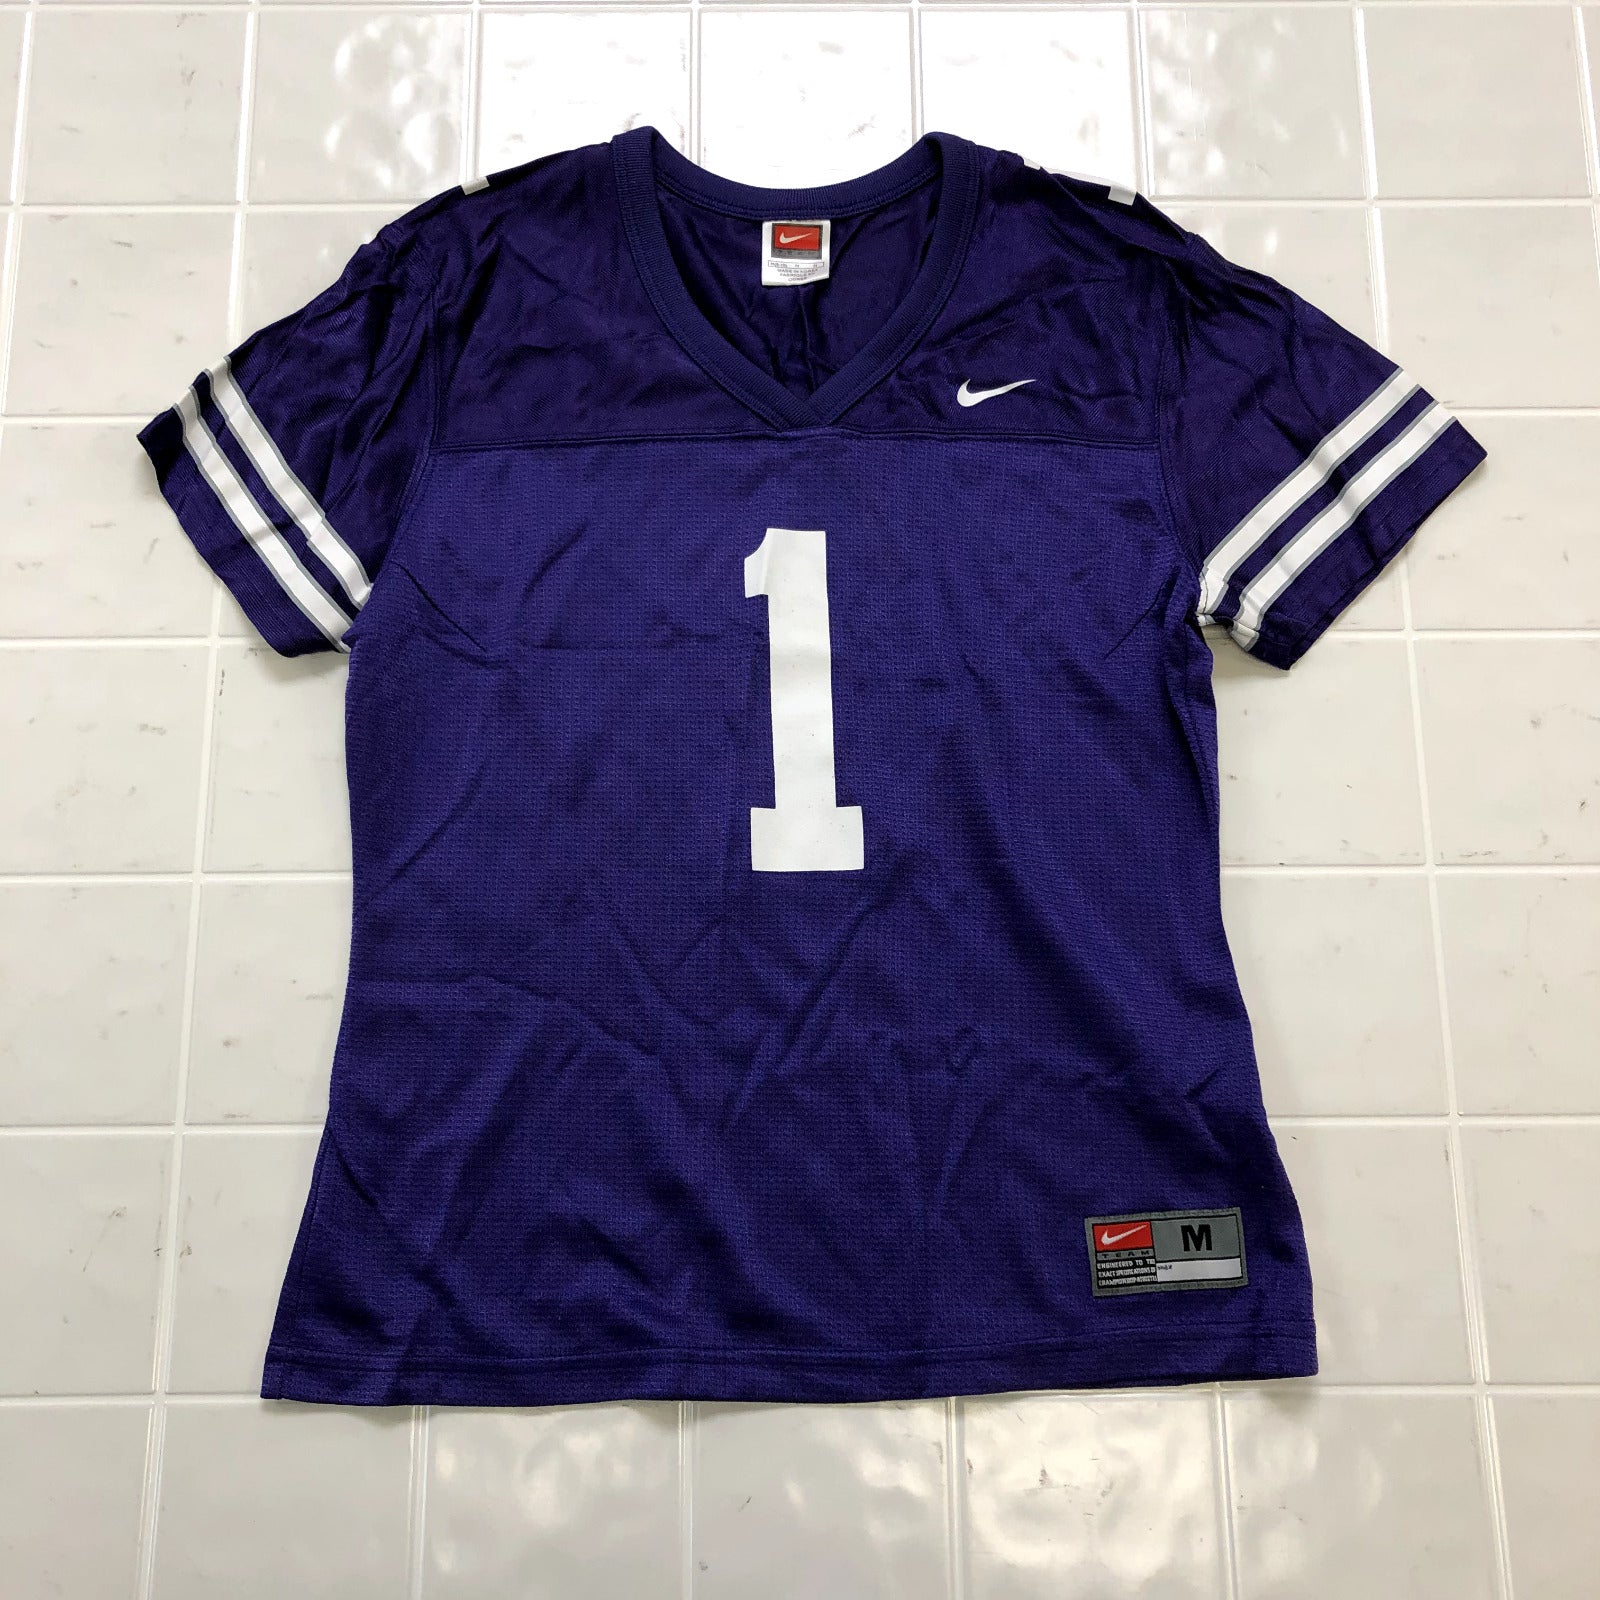 Nike Purple Graphic 1 Regular Fit Loose V-neck Athletic Jersey Girls' Size M